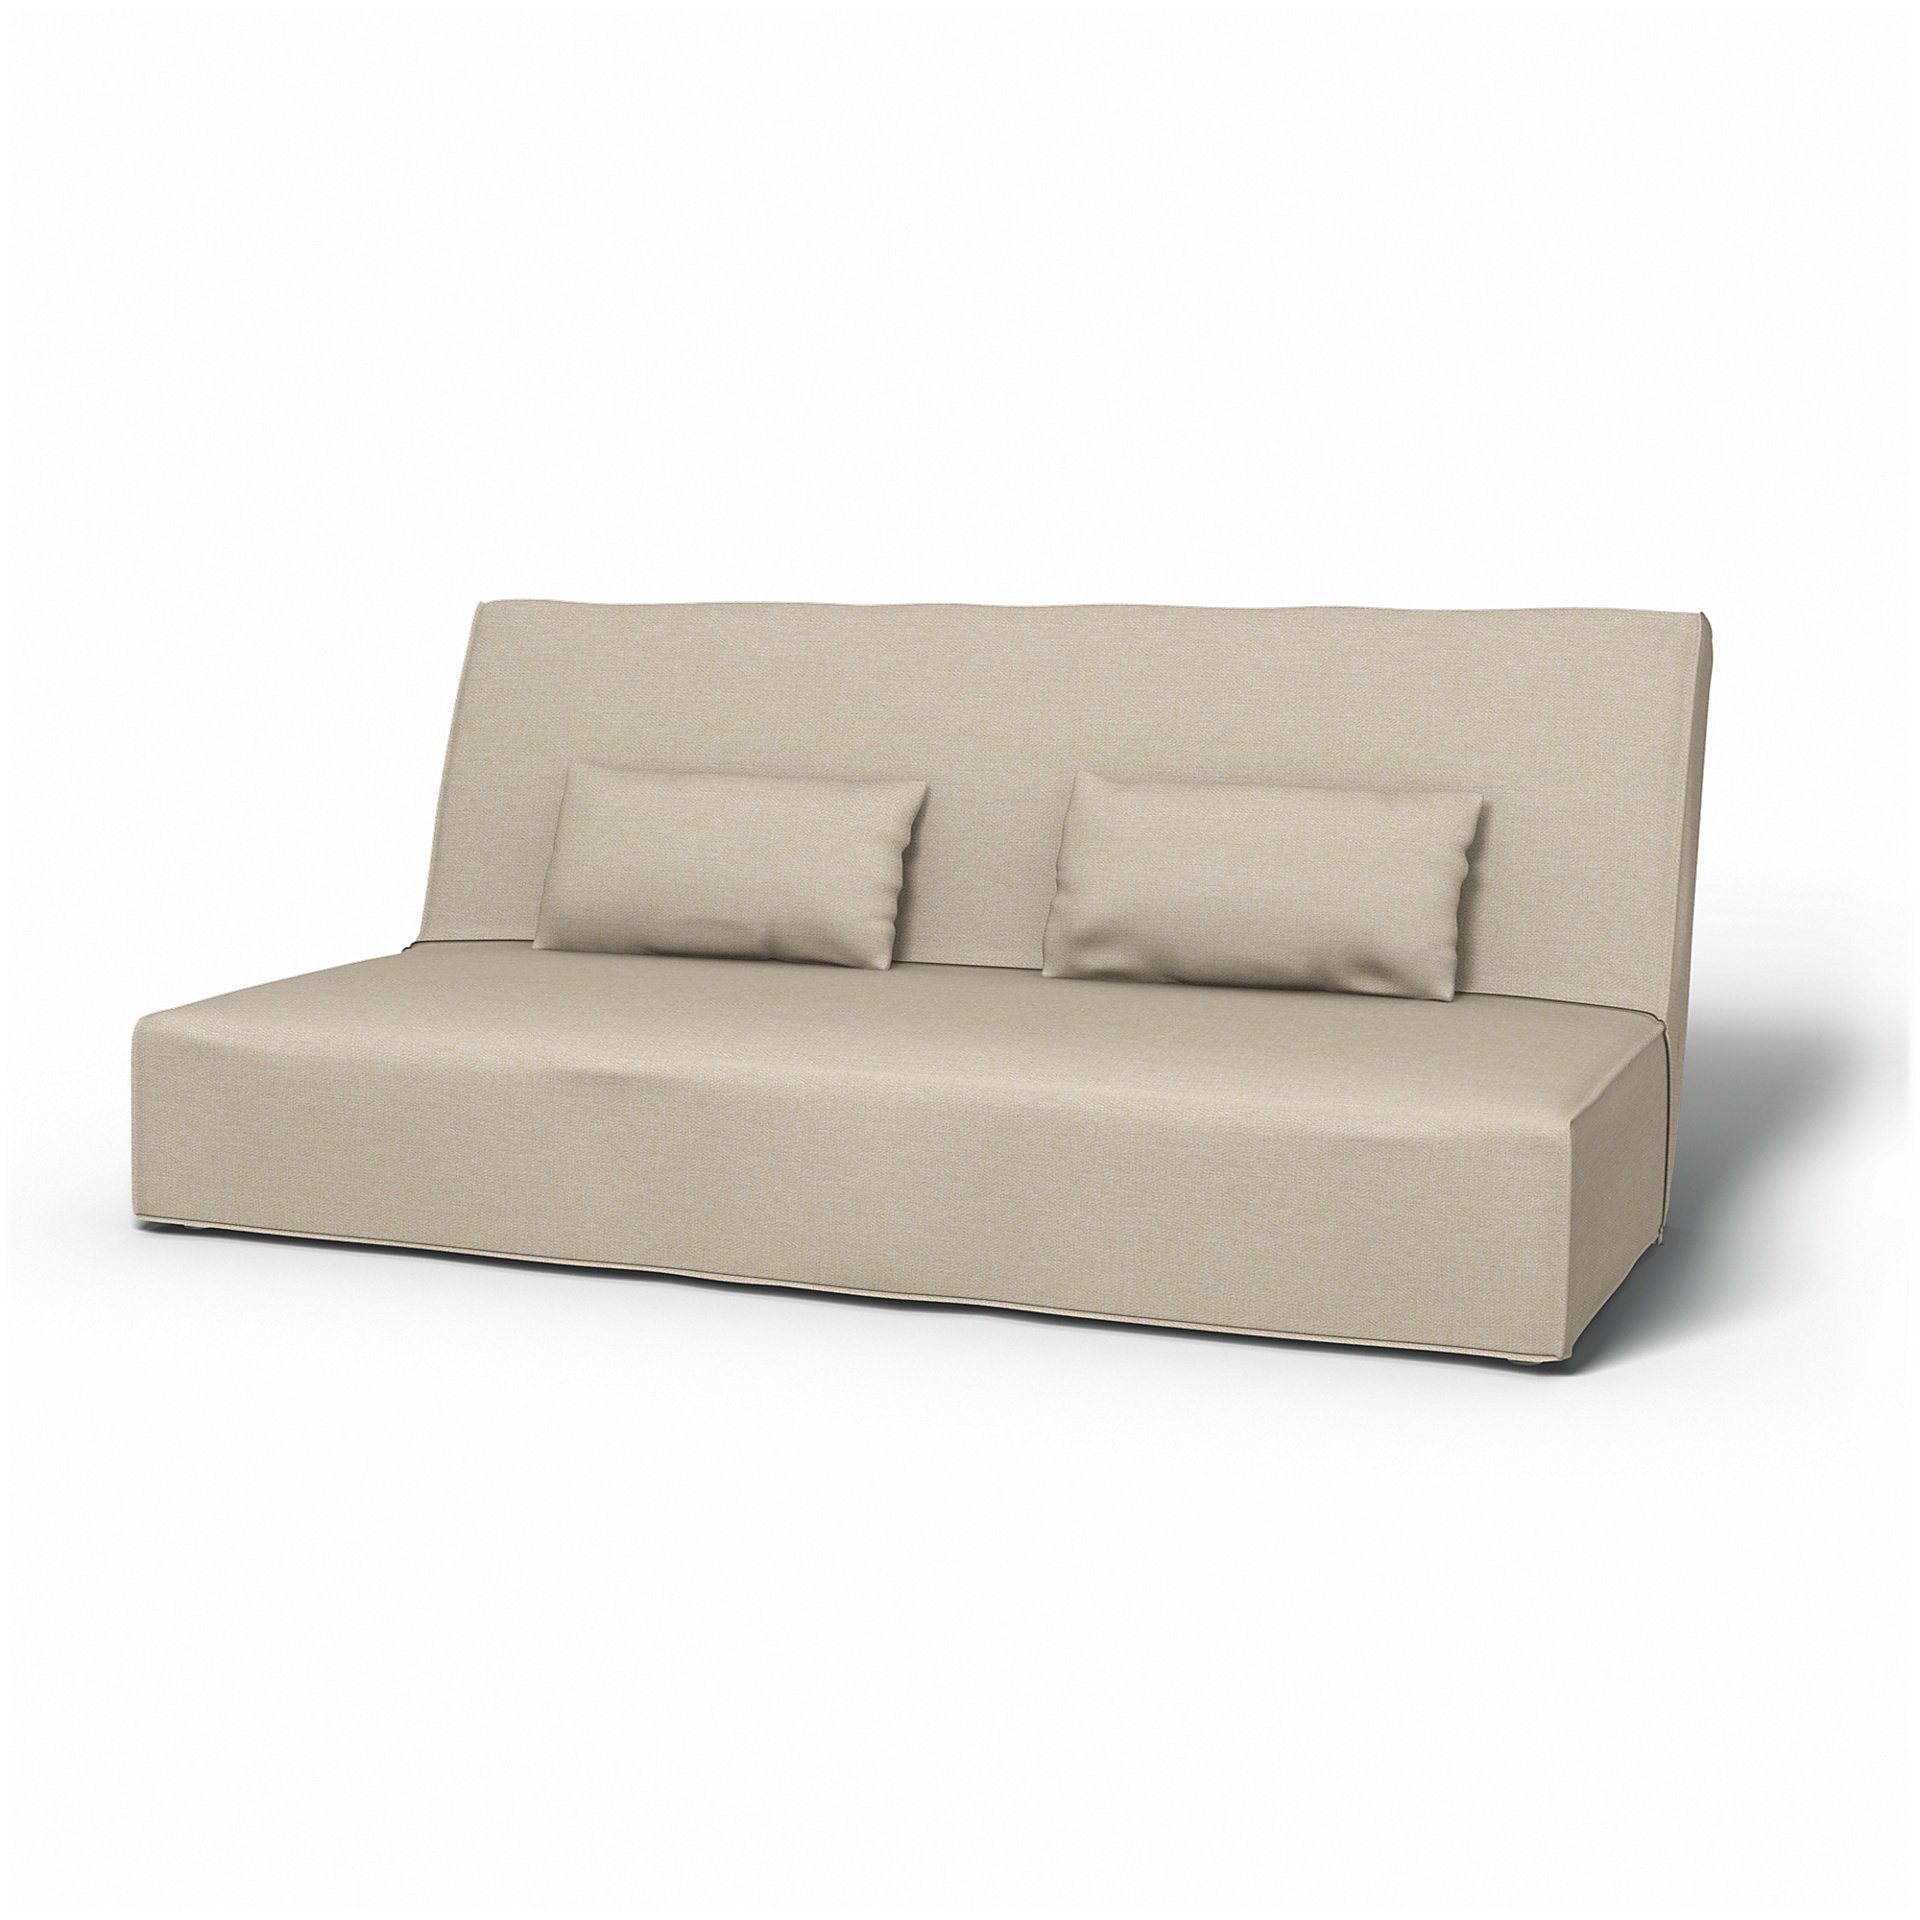 IKEA - Beddinge Sofa Bed Cover, Natural, Boucle & Texture - Bemz